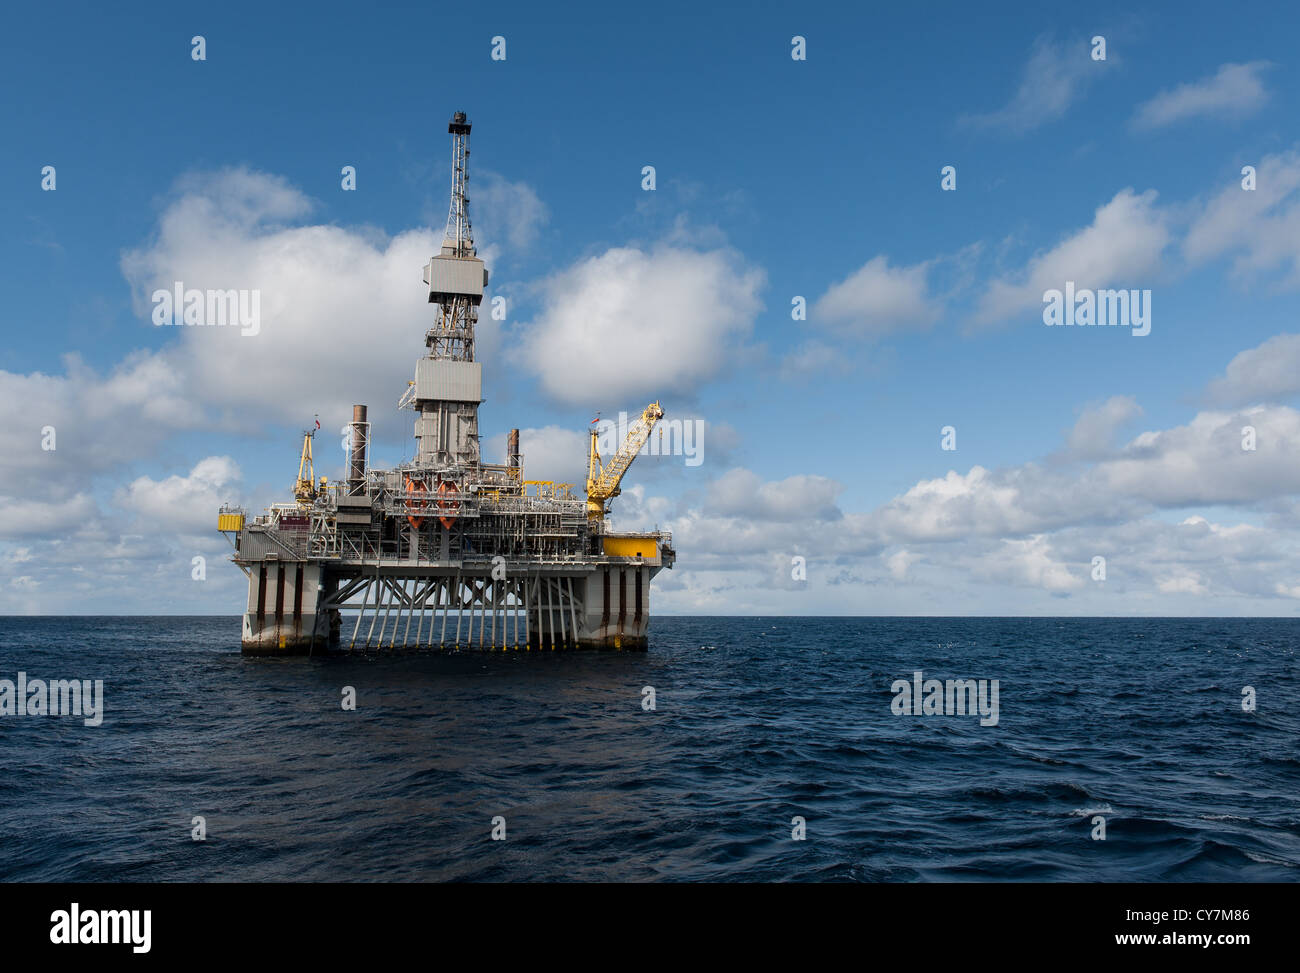 Oil rig in the North Sea Stock Photo